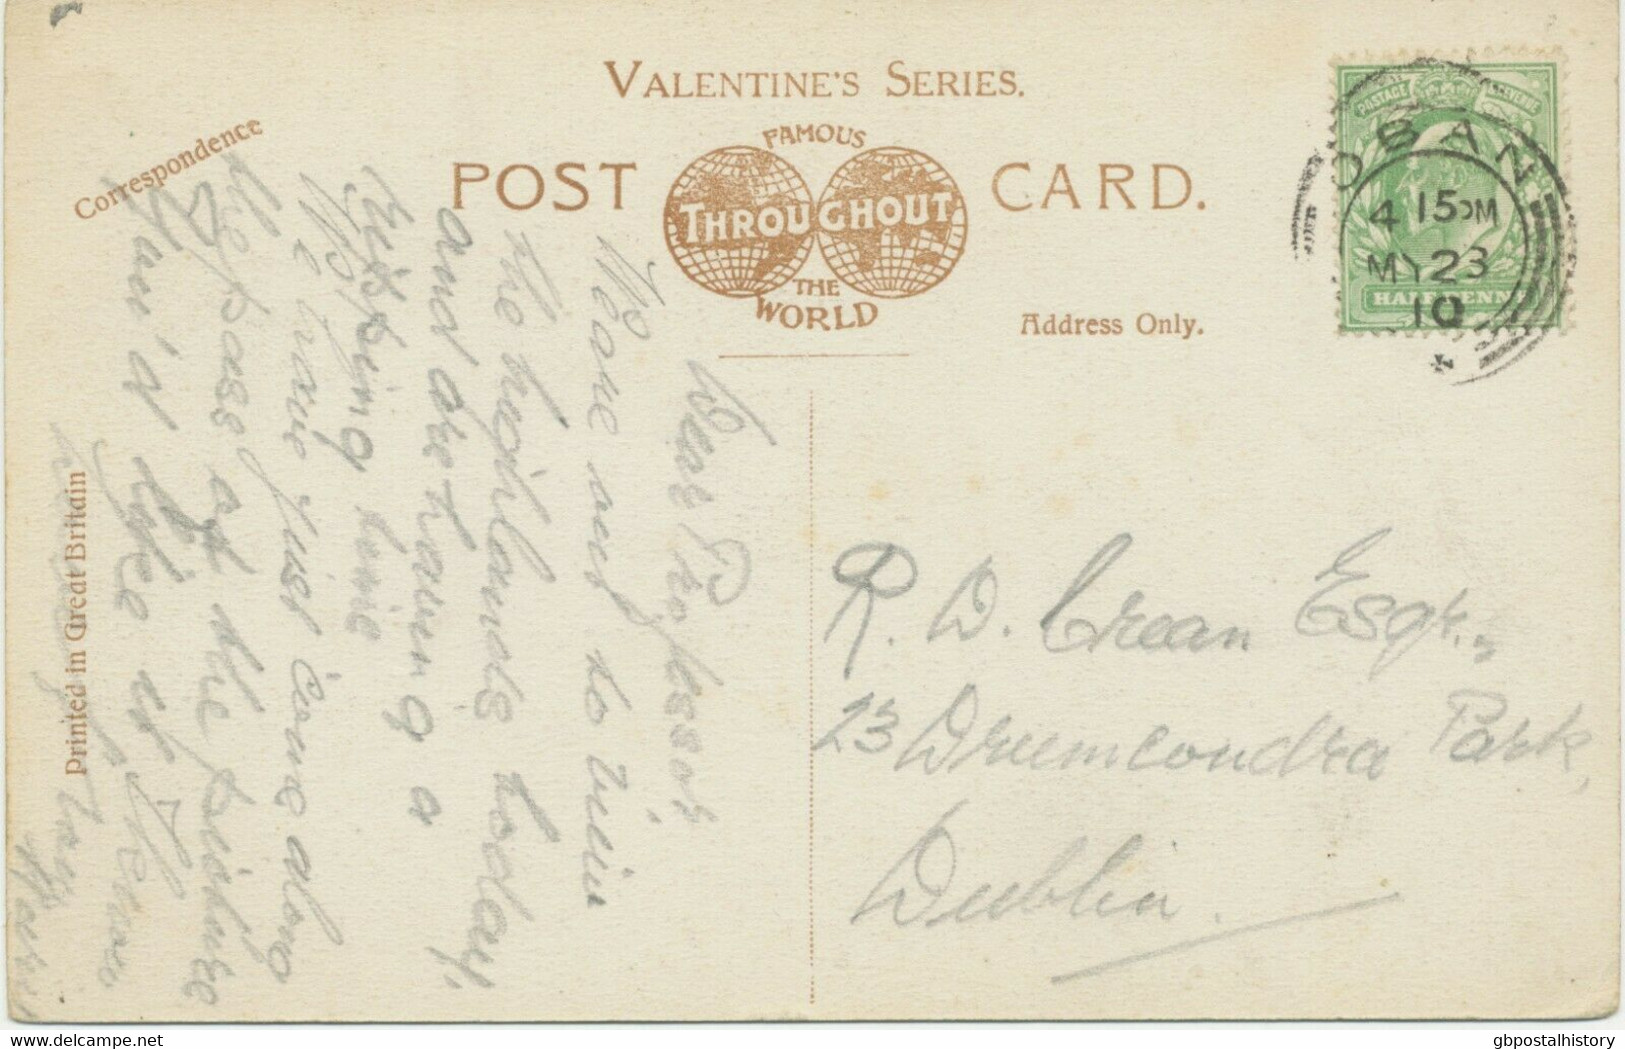 GB SCOTTISH VILLAGE POSTMARKS „OBAN“ Very Fine Rare Strike (25mm, Time Code „4 15PM“) On Superb Postcard 1910 - Ecosse